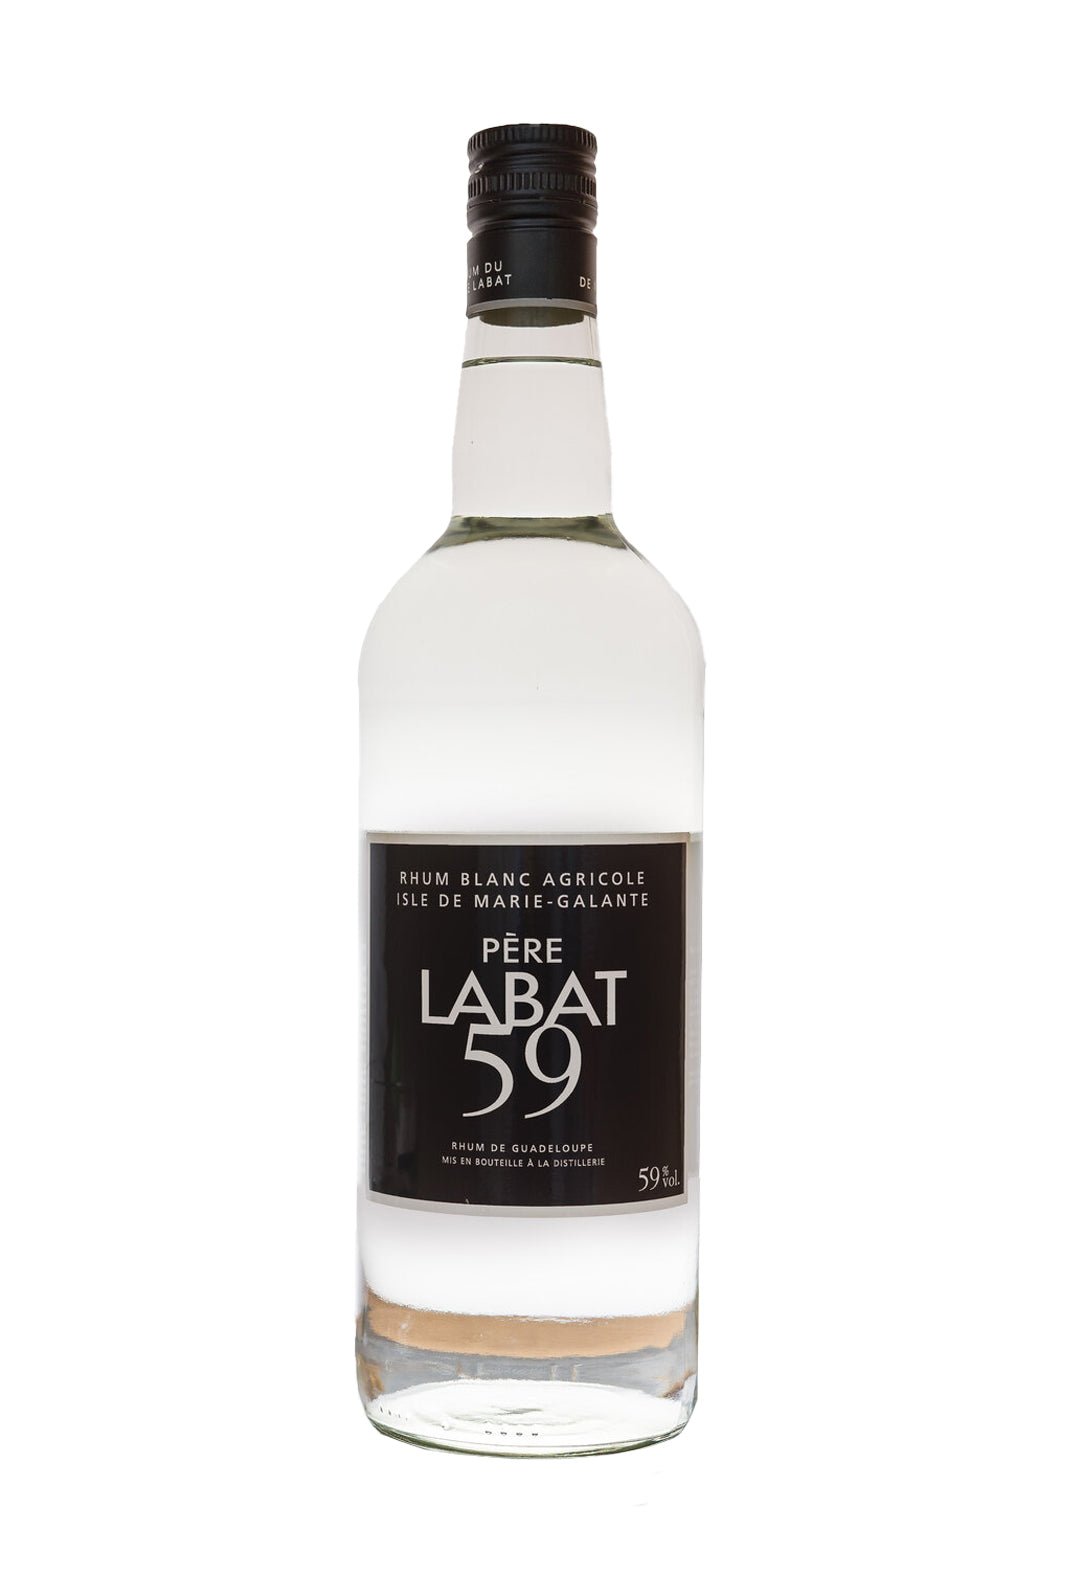 Labat Rum White Navy Strength 59% 700ml | Rum | Shop online at Spirits of France